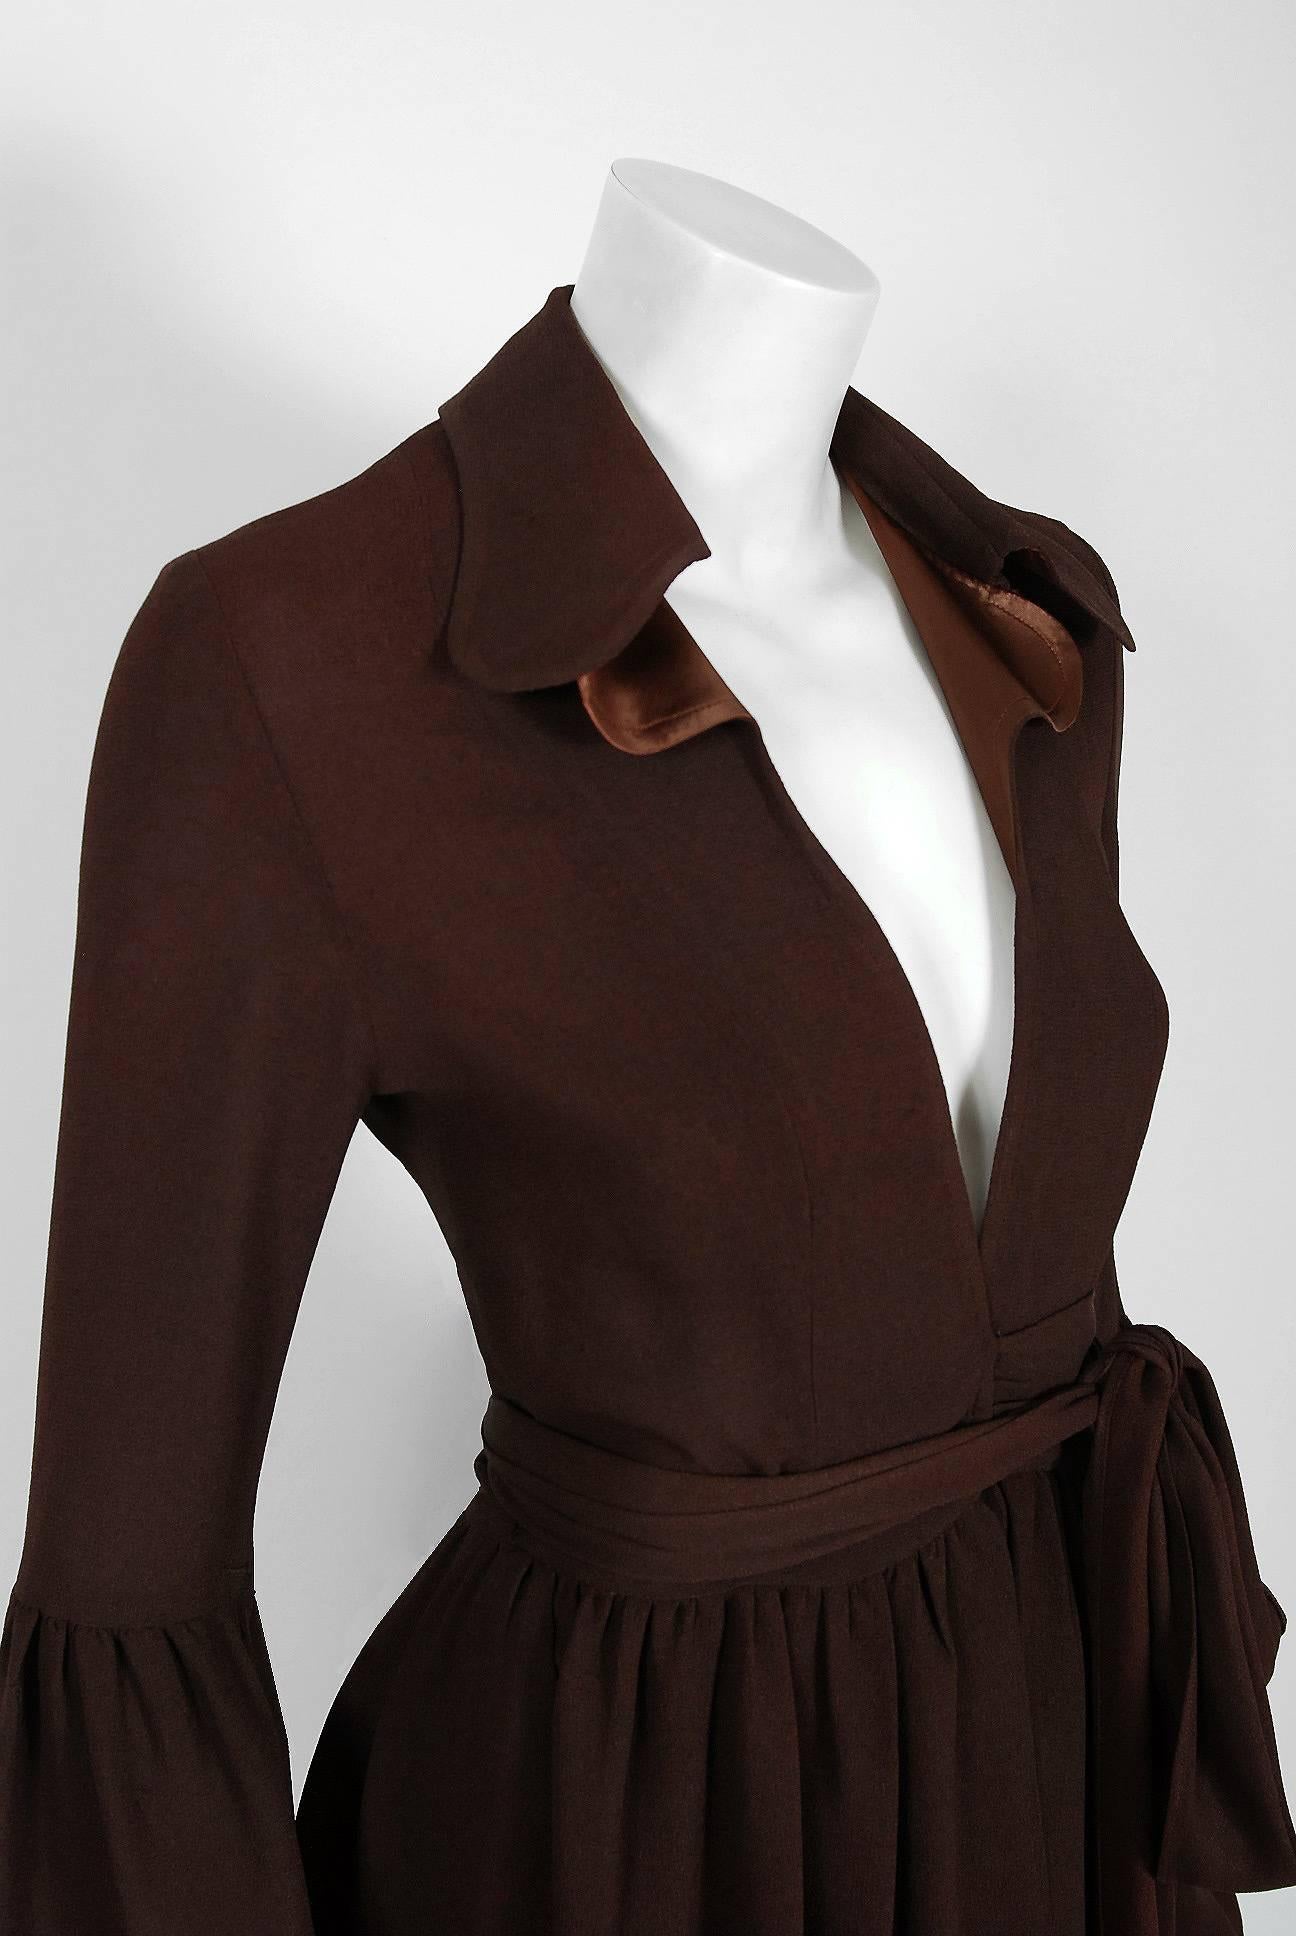 Black 1971 Ossie Clark Brown Moss-Crepe & Satin Bell-Sleeve Plunge Dress Pant Suit